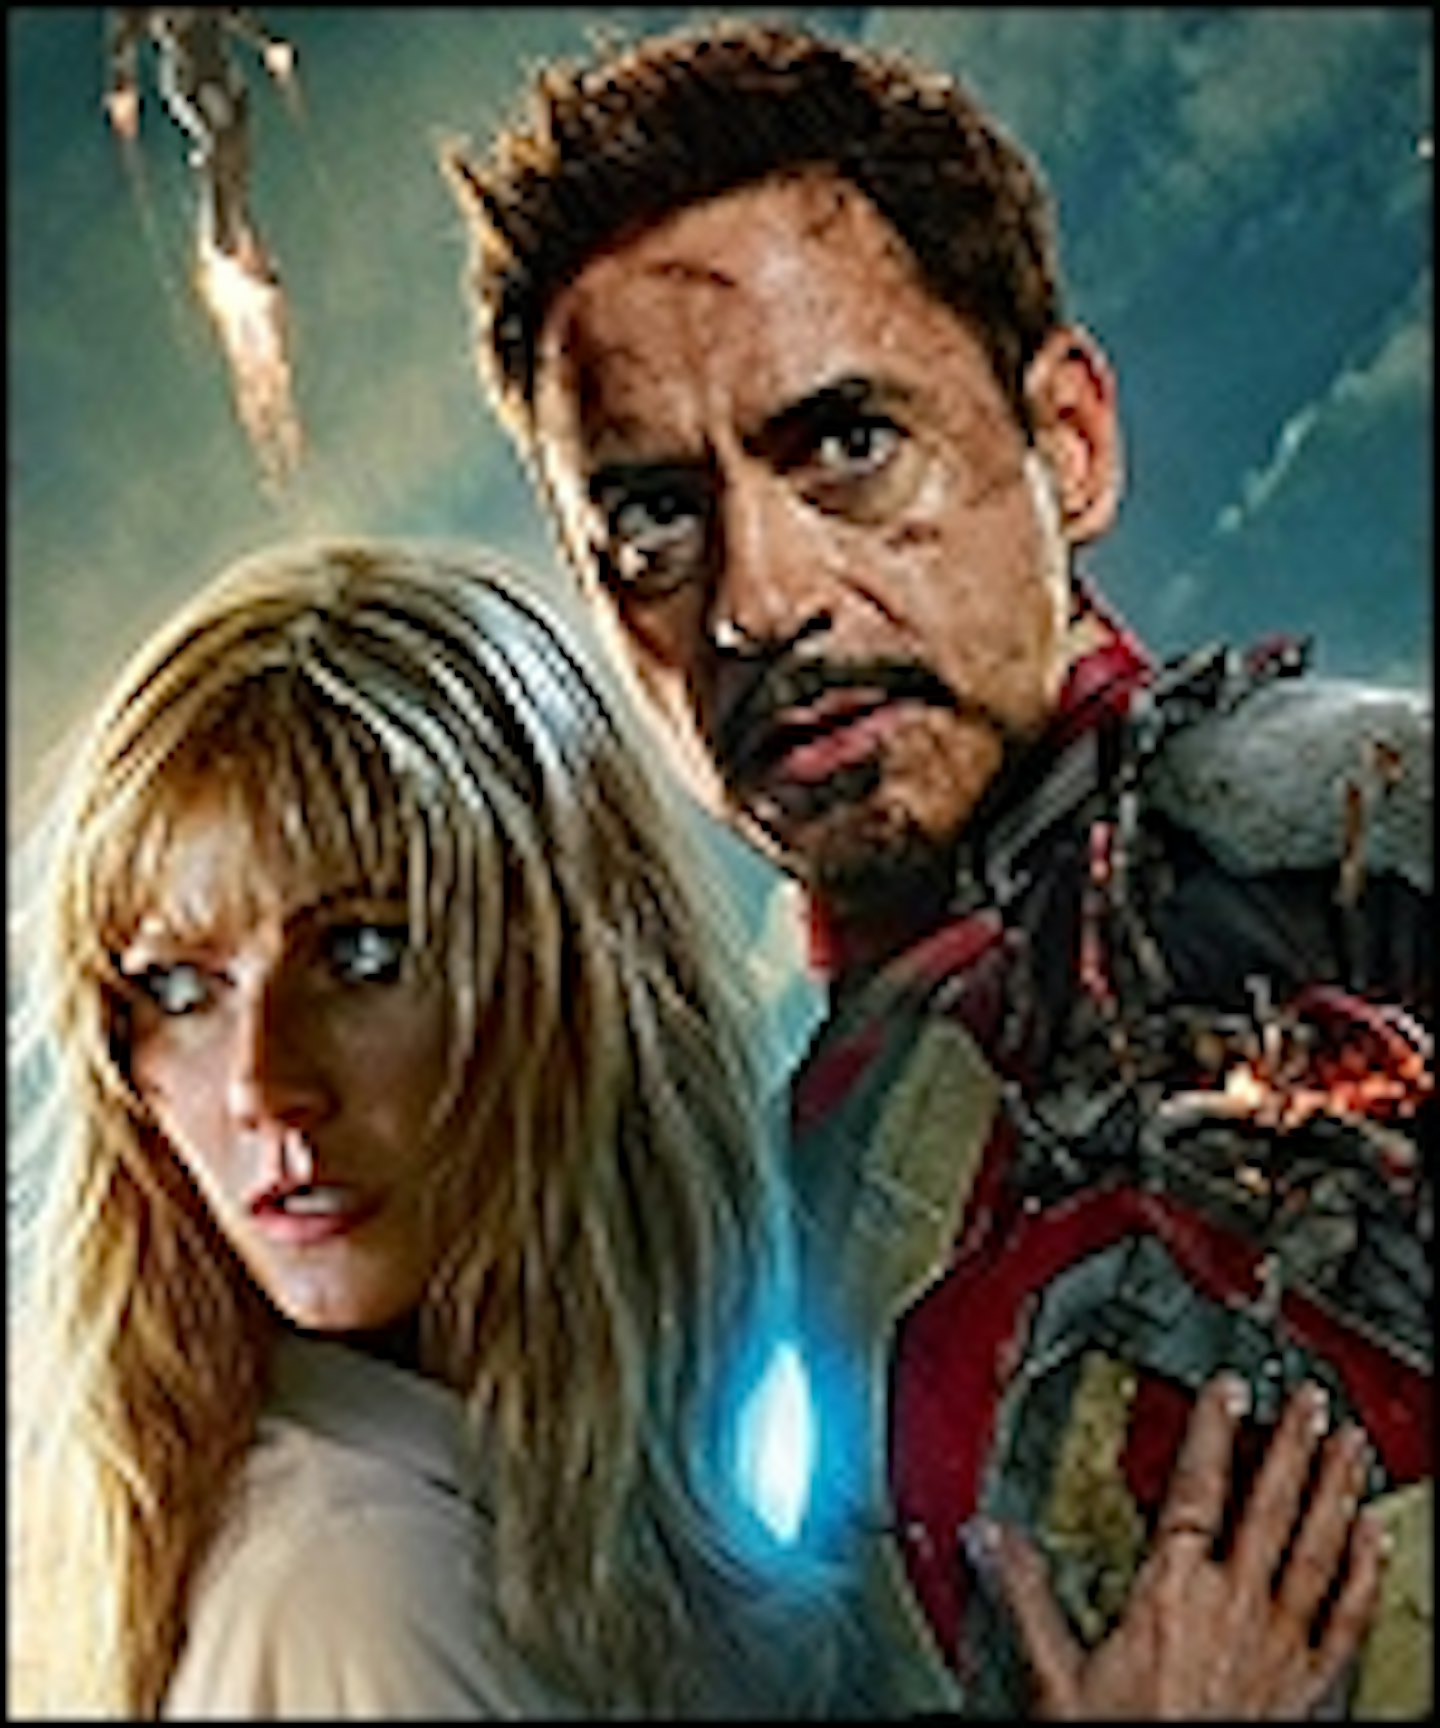 New International Iron Man 3 Poster Hits